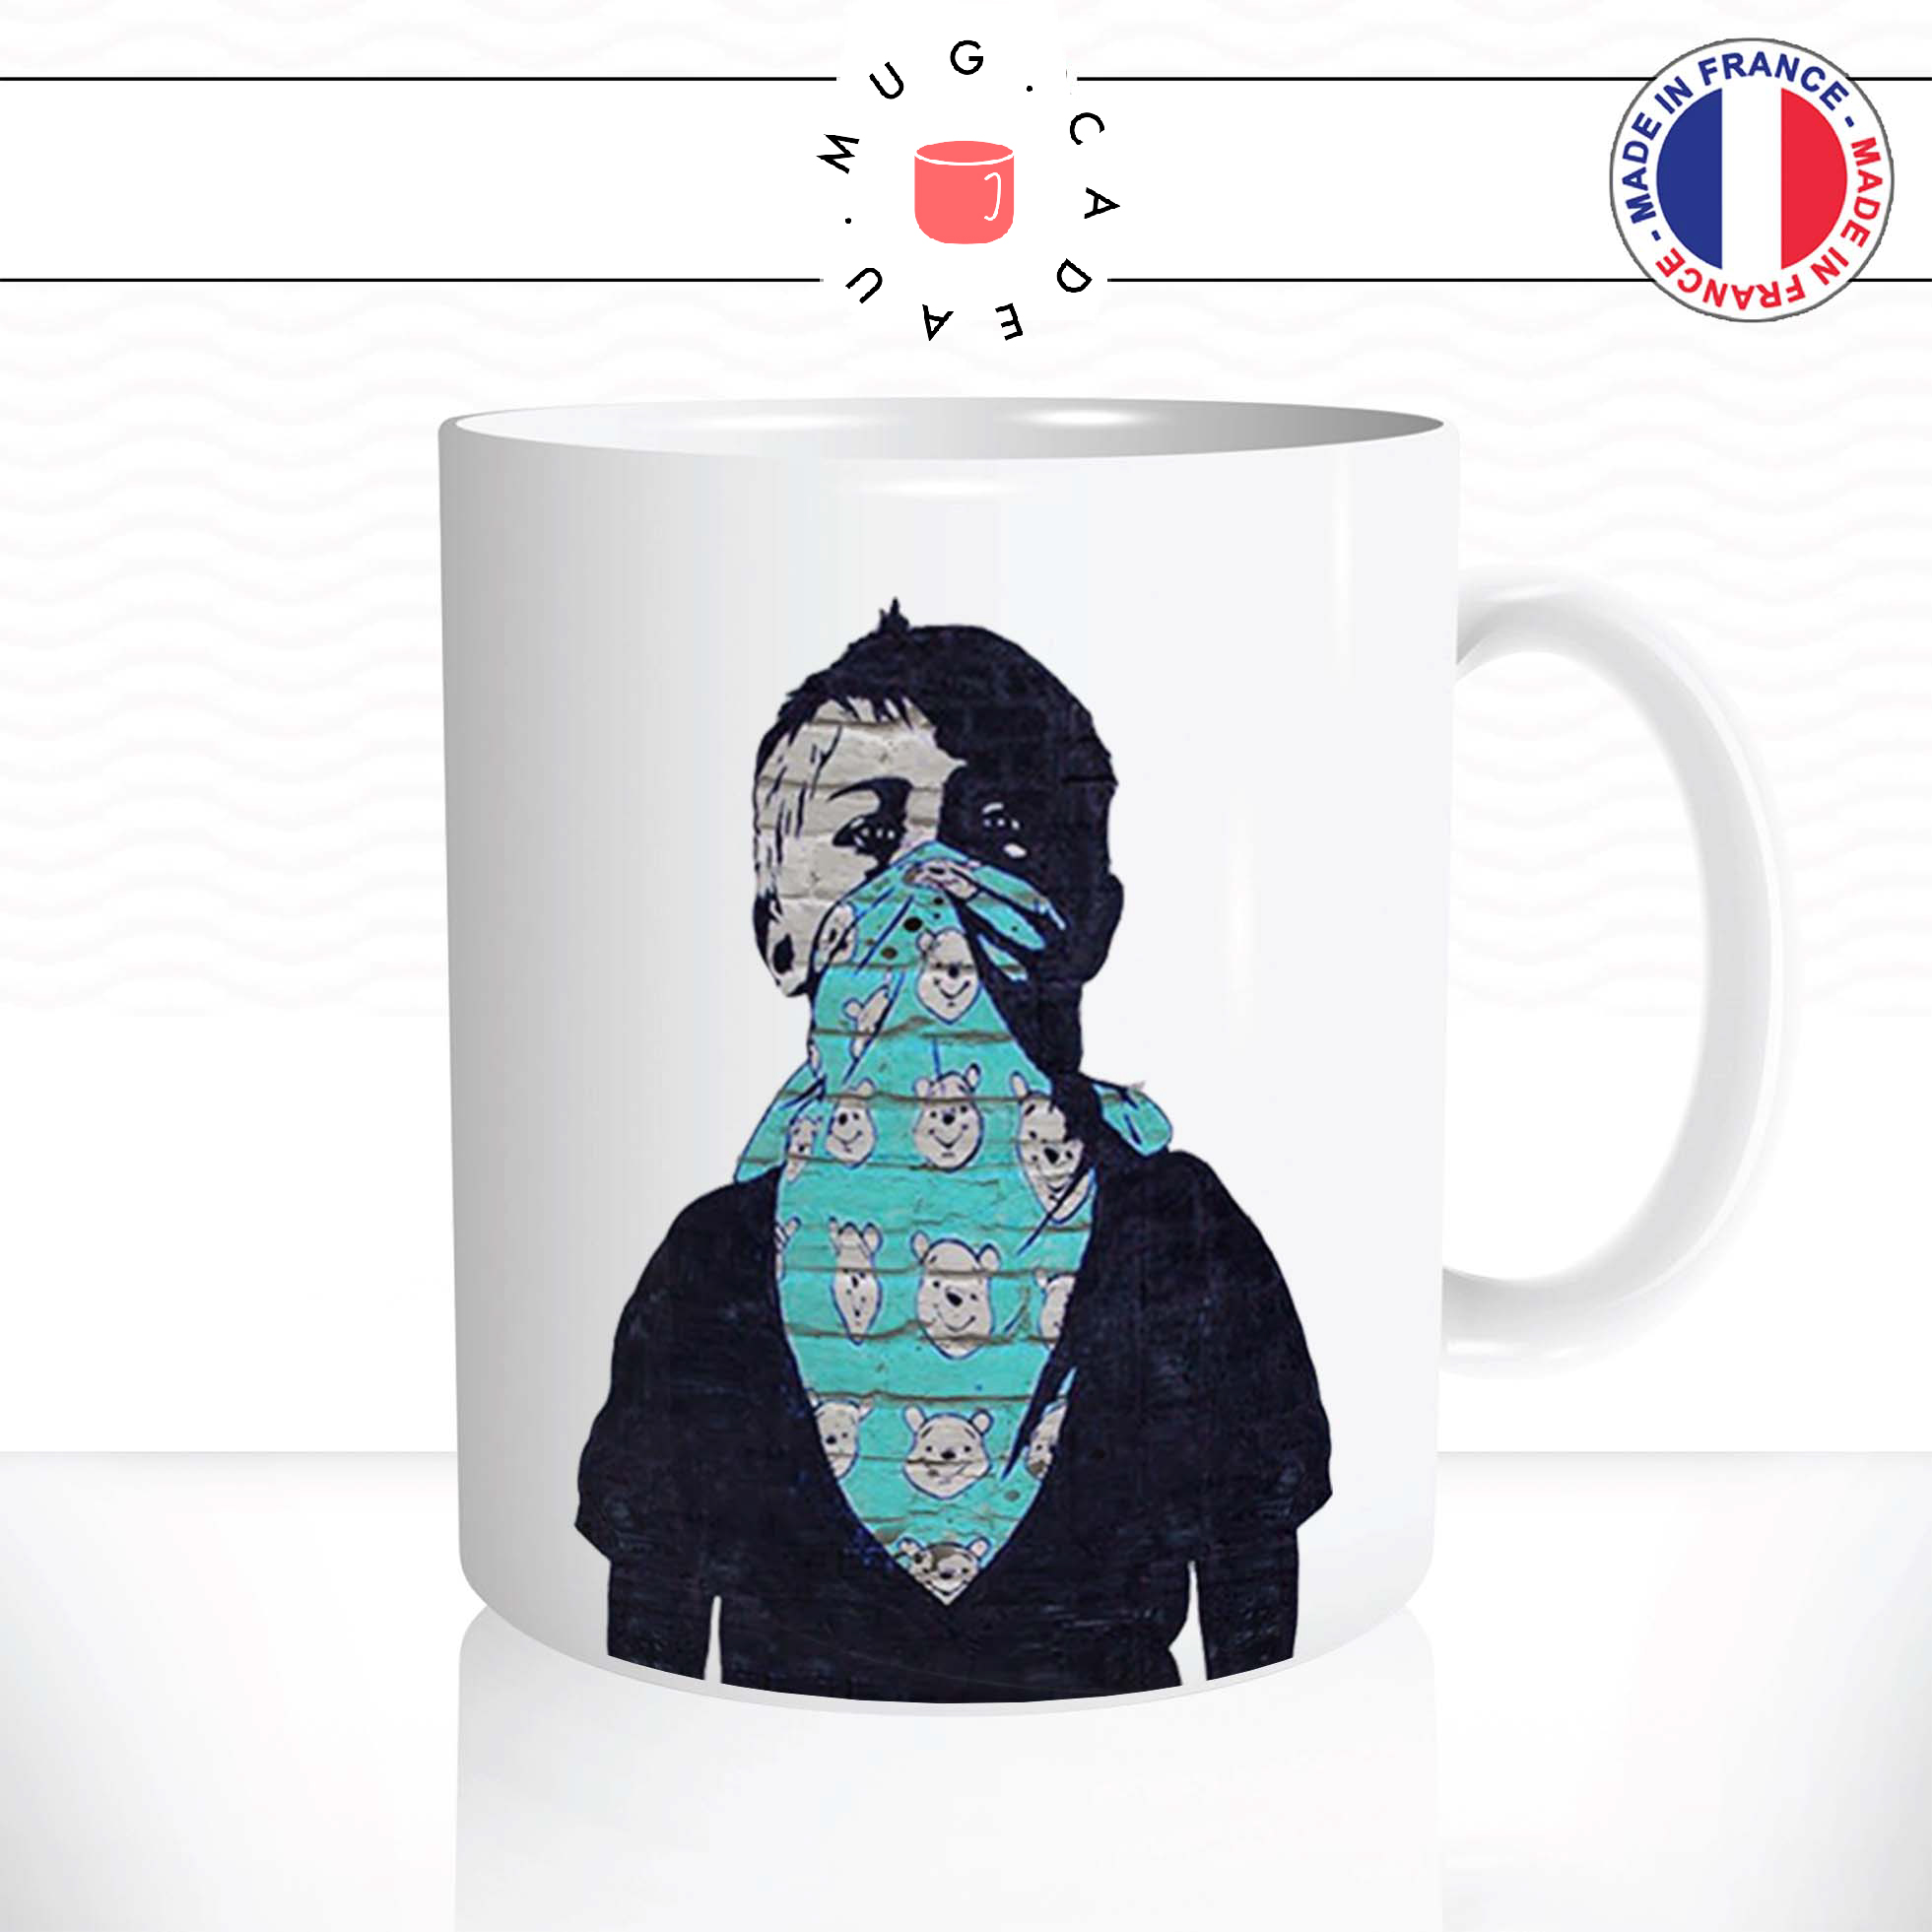 mug-tasse-ref11-art-artiste-bansky-tag-graff-enfant-foulard-bleu-winnie-ourson-briques-cafe-the-mugs-tasses-personnalise-original-anse-droite